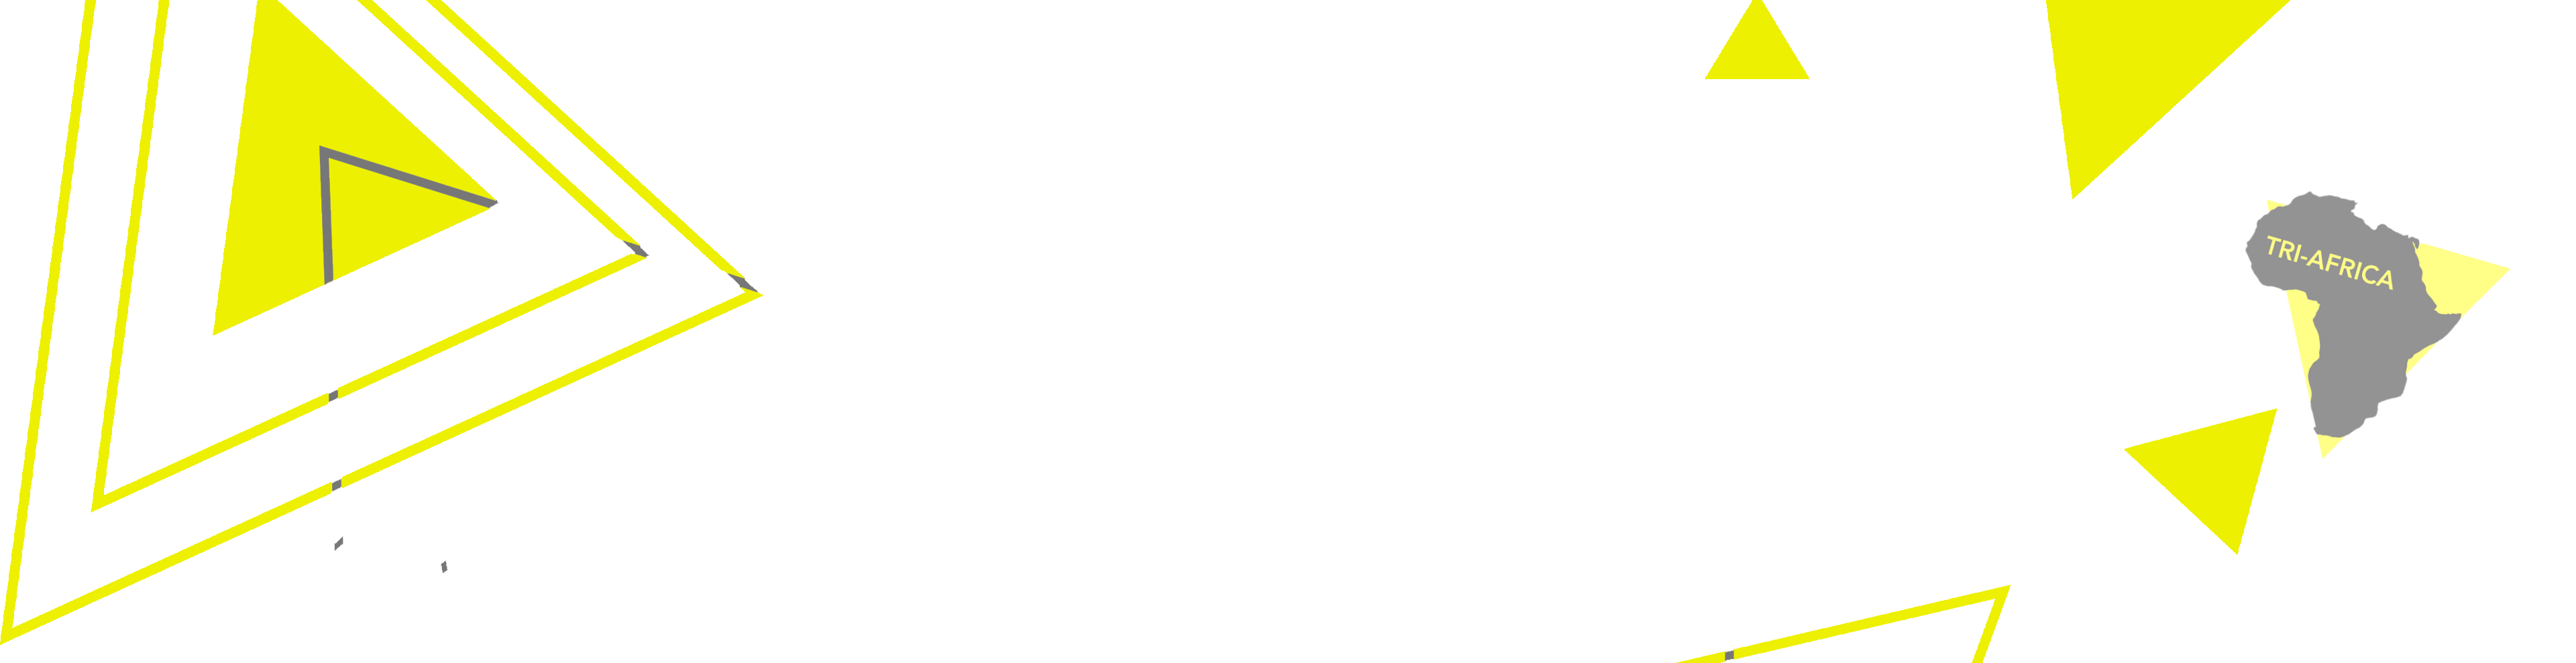 Rossimoda brand top image